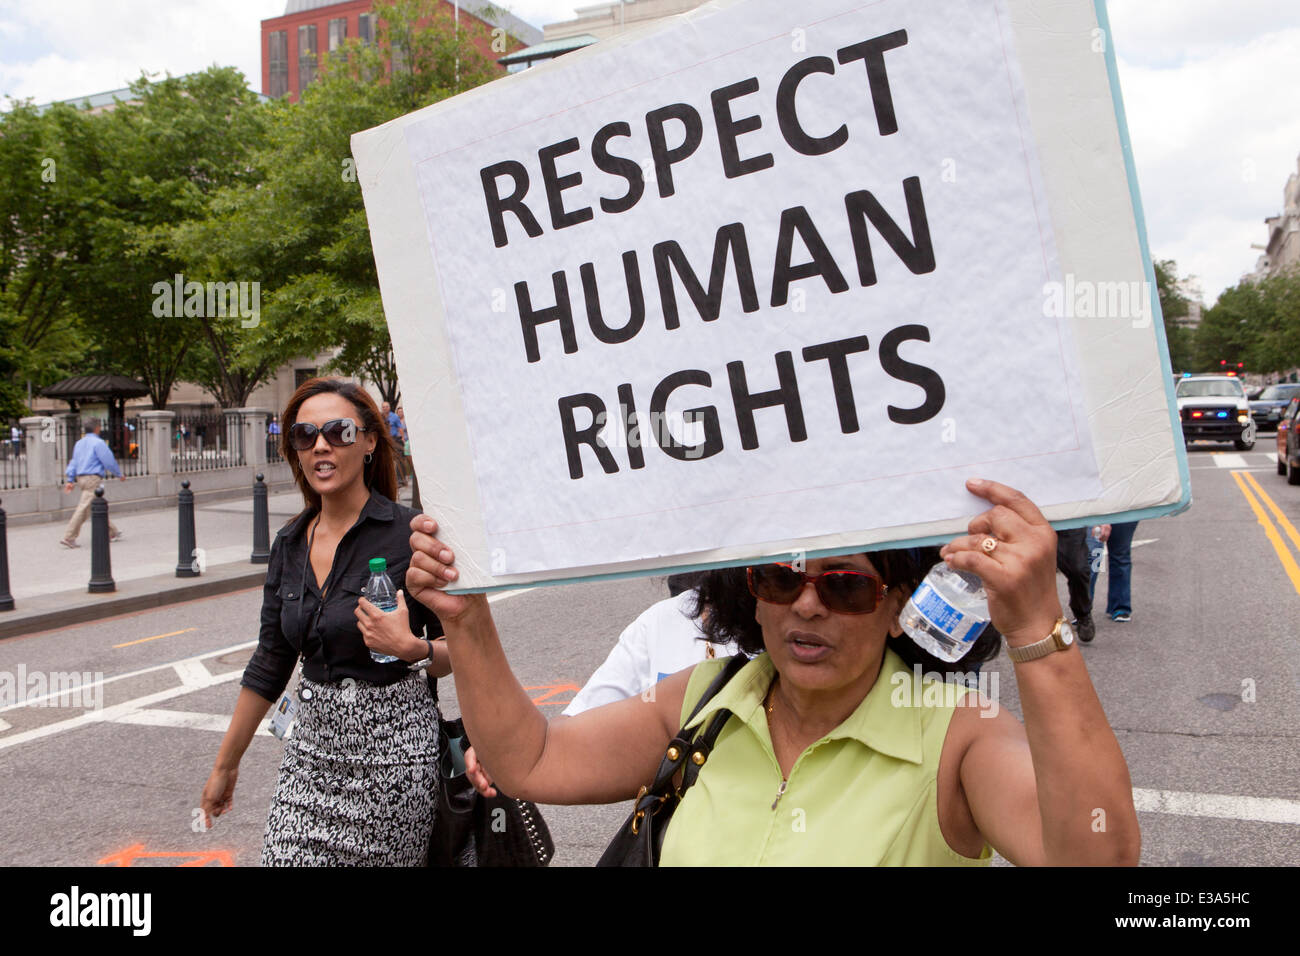 Human rights activist holding sign - Washington, DC USA Stock Photo